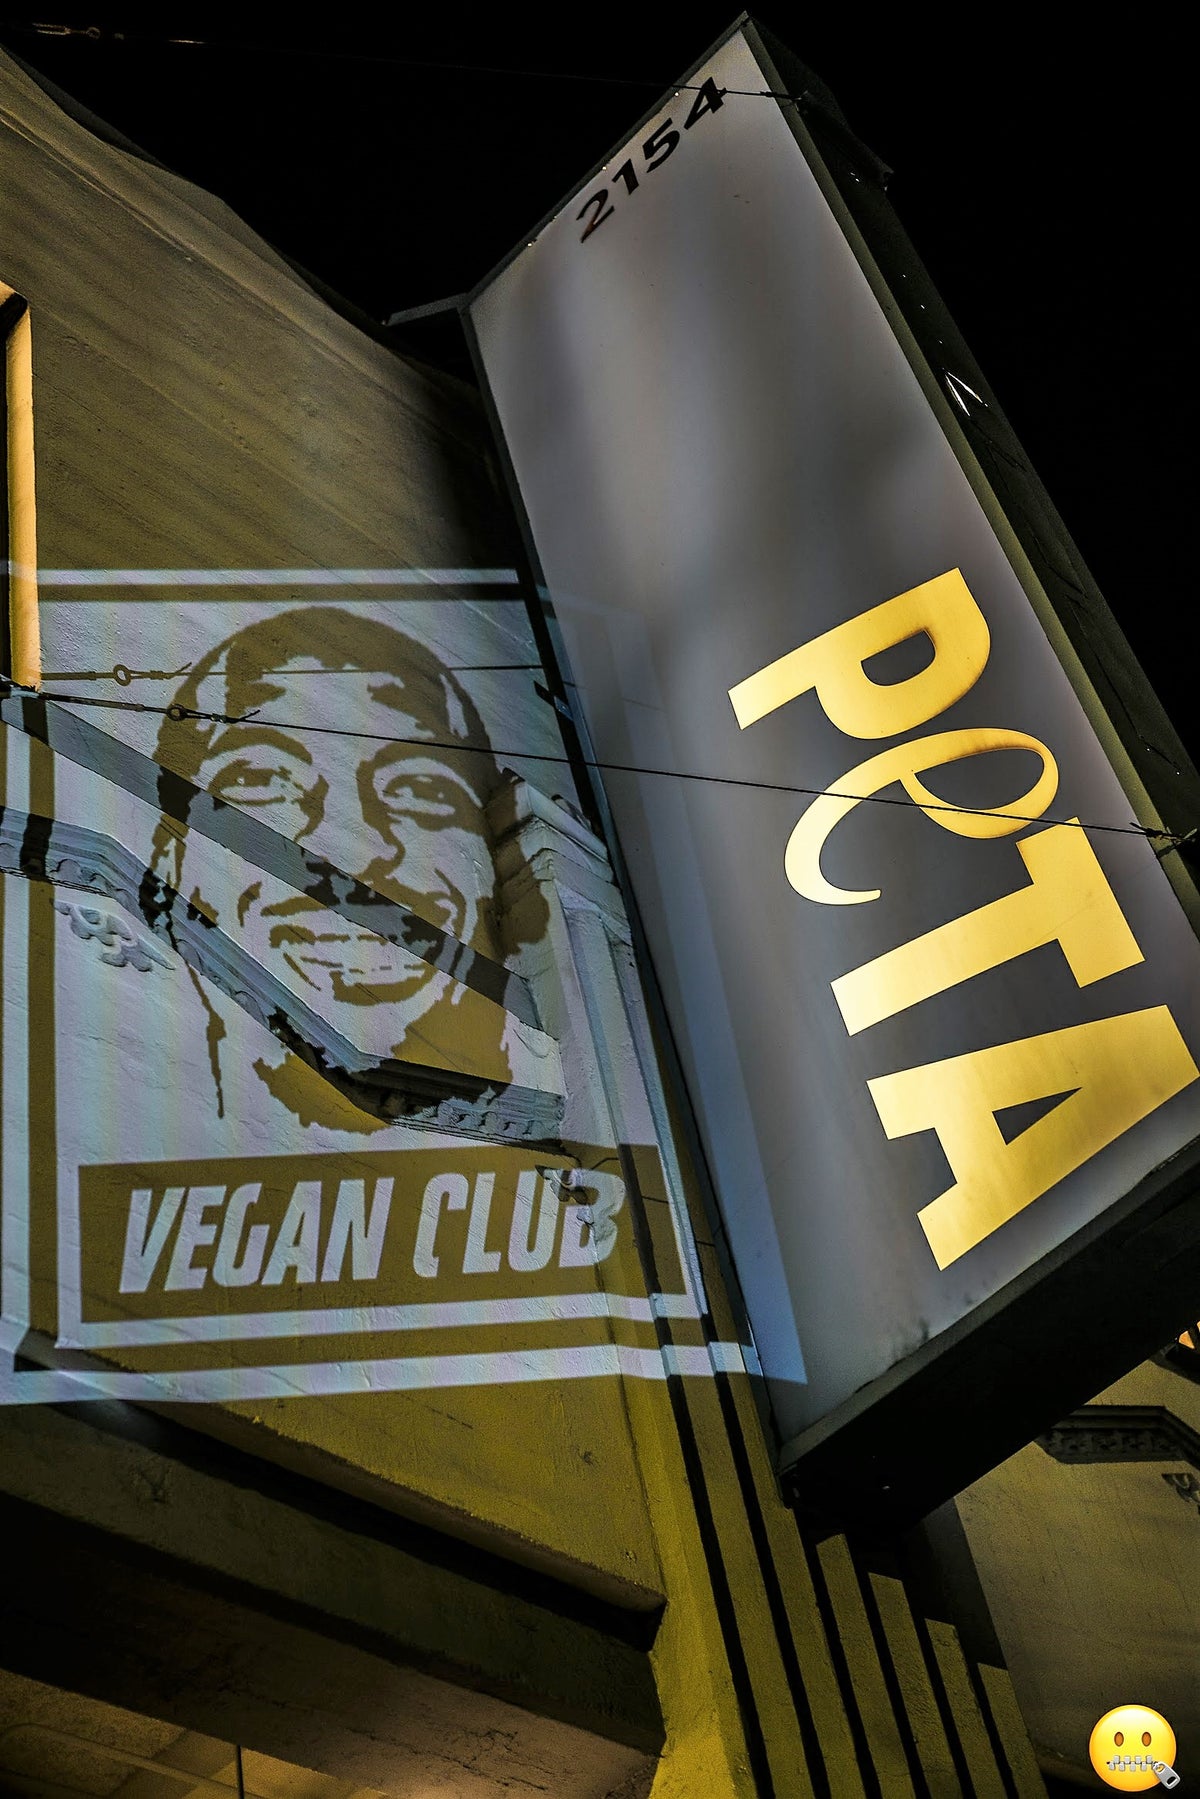 Street Art NewsPrint Poster Vegan Club featuring John Salley Signed L3f0u - pic by @chefitophoto